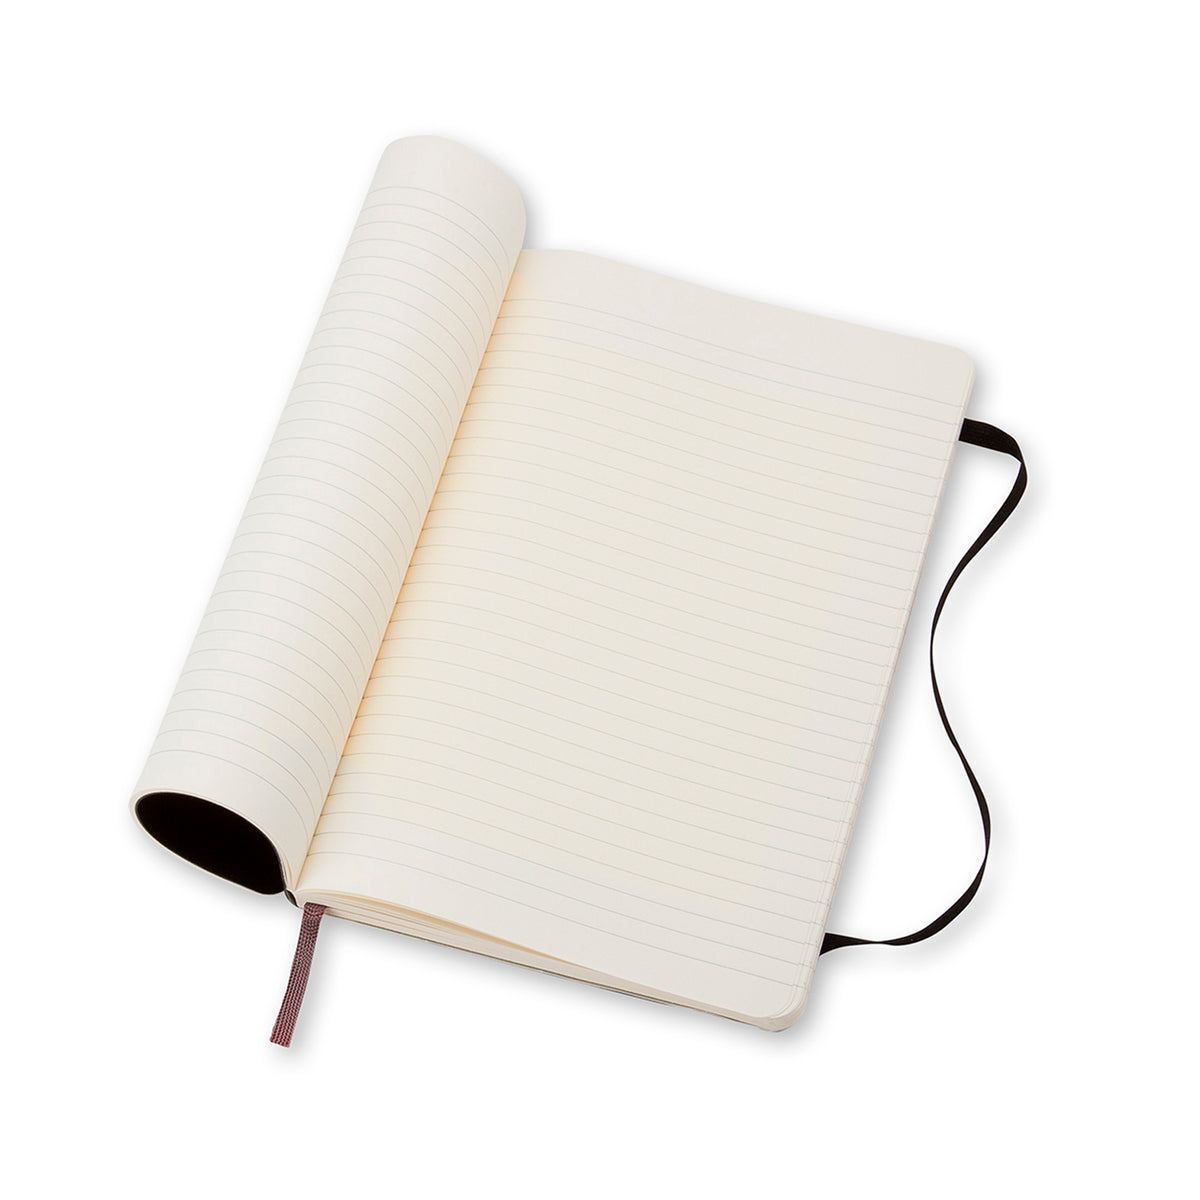 Moleskine - Classic Soft Cover Notebook - Ruled - Pocket - Black